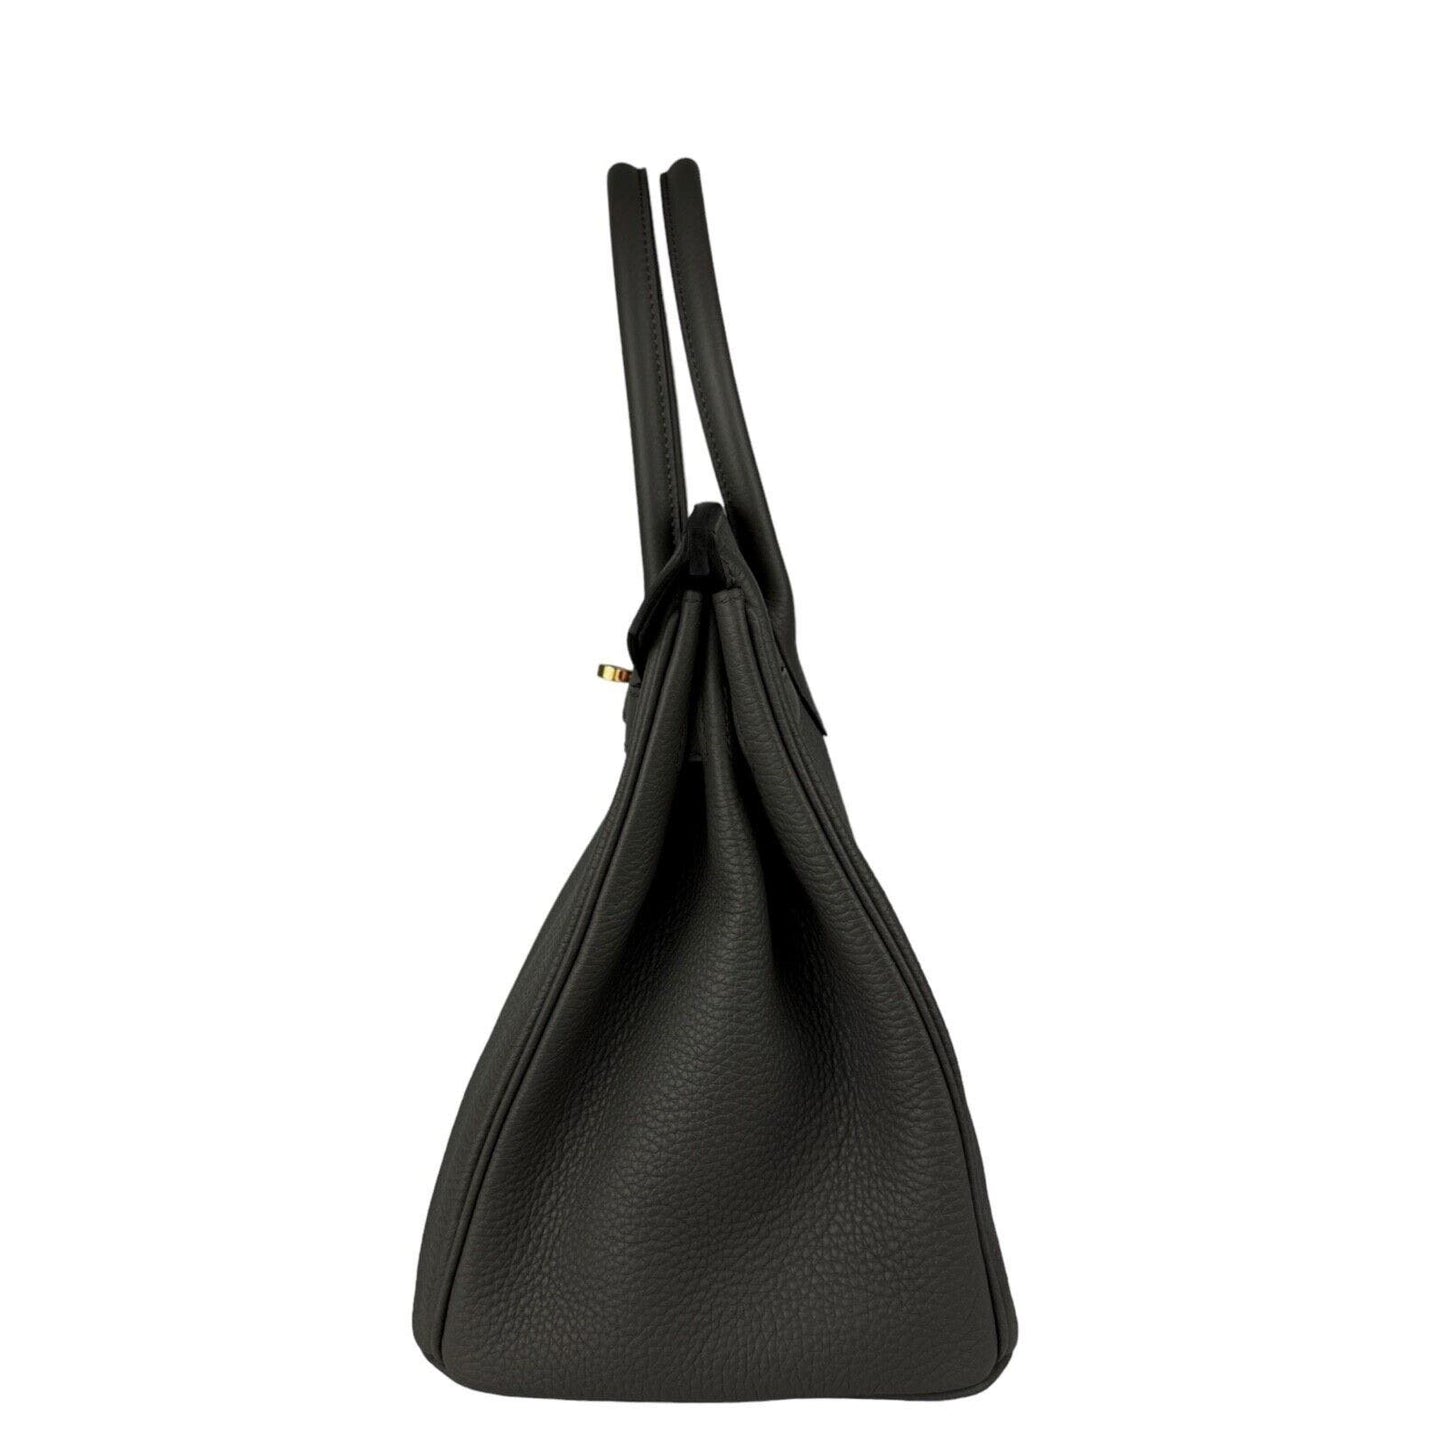 Hermes Birkin 30 Etain Grey Gray Gris Togo Leather Rose Gold Hardware Handbag